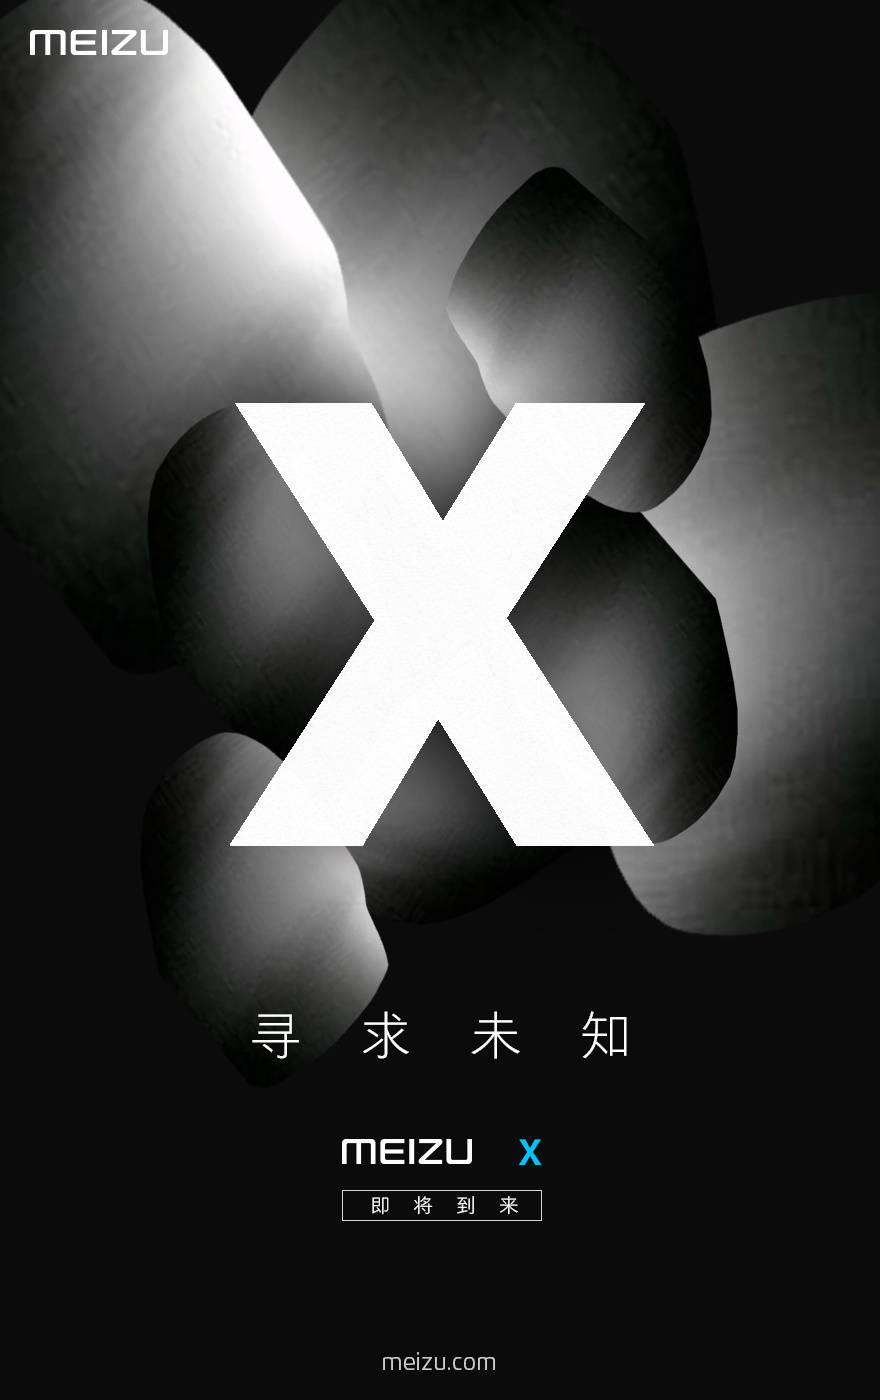 「X」製品の発表を告知。MEIZU BOXか新型イヤホンの可能性が高い